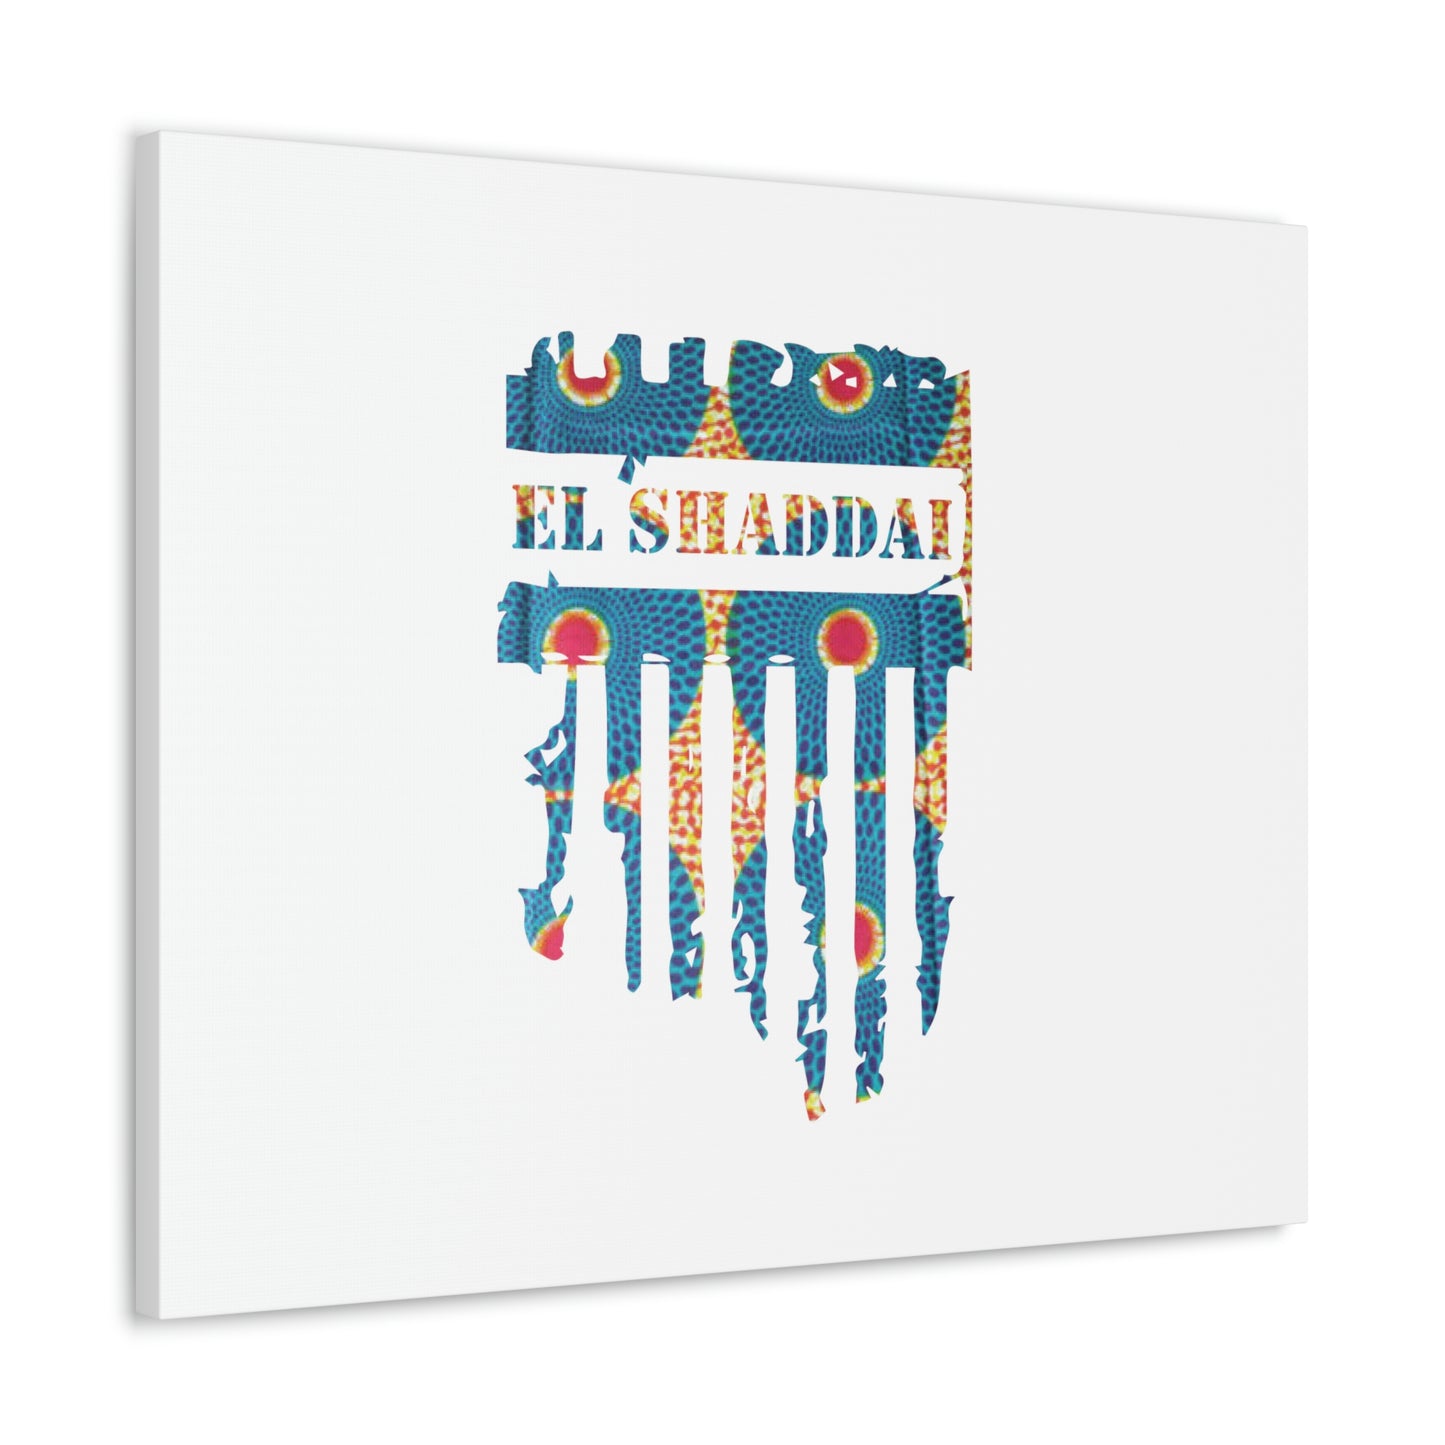 El ShaddaI